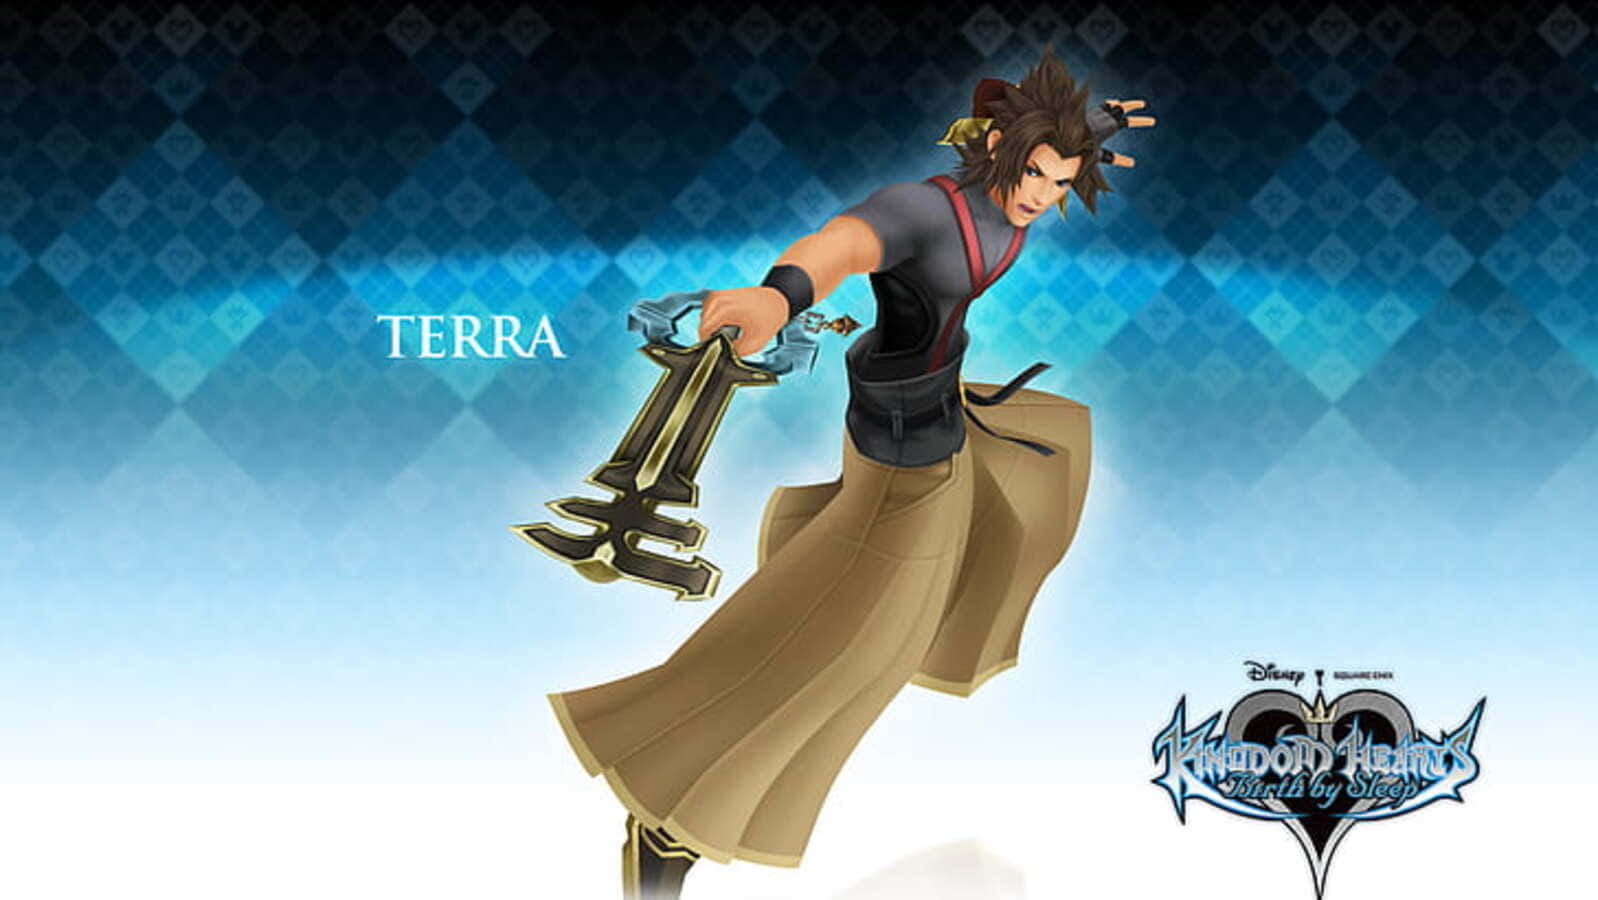 Caption: Terra in Action - Kingdom Hearts Wallpaper